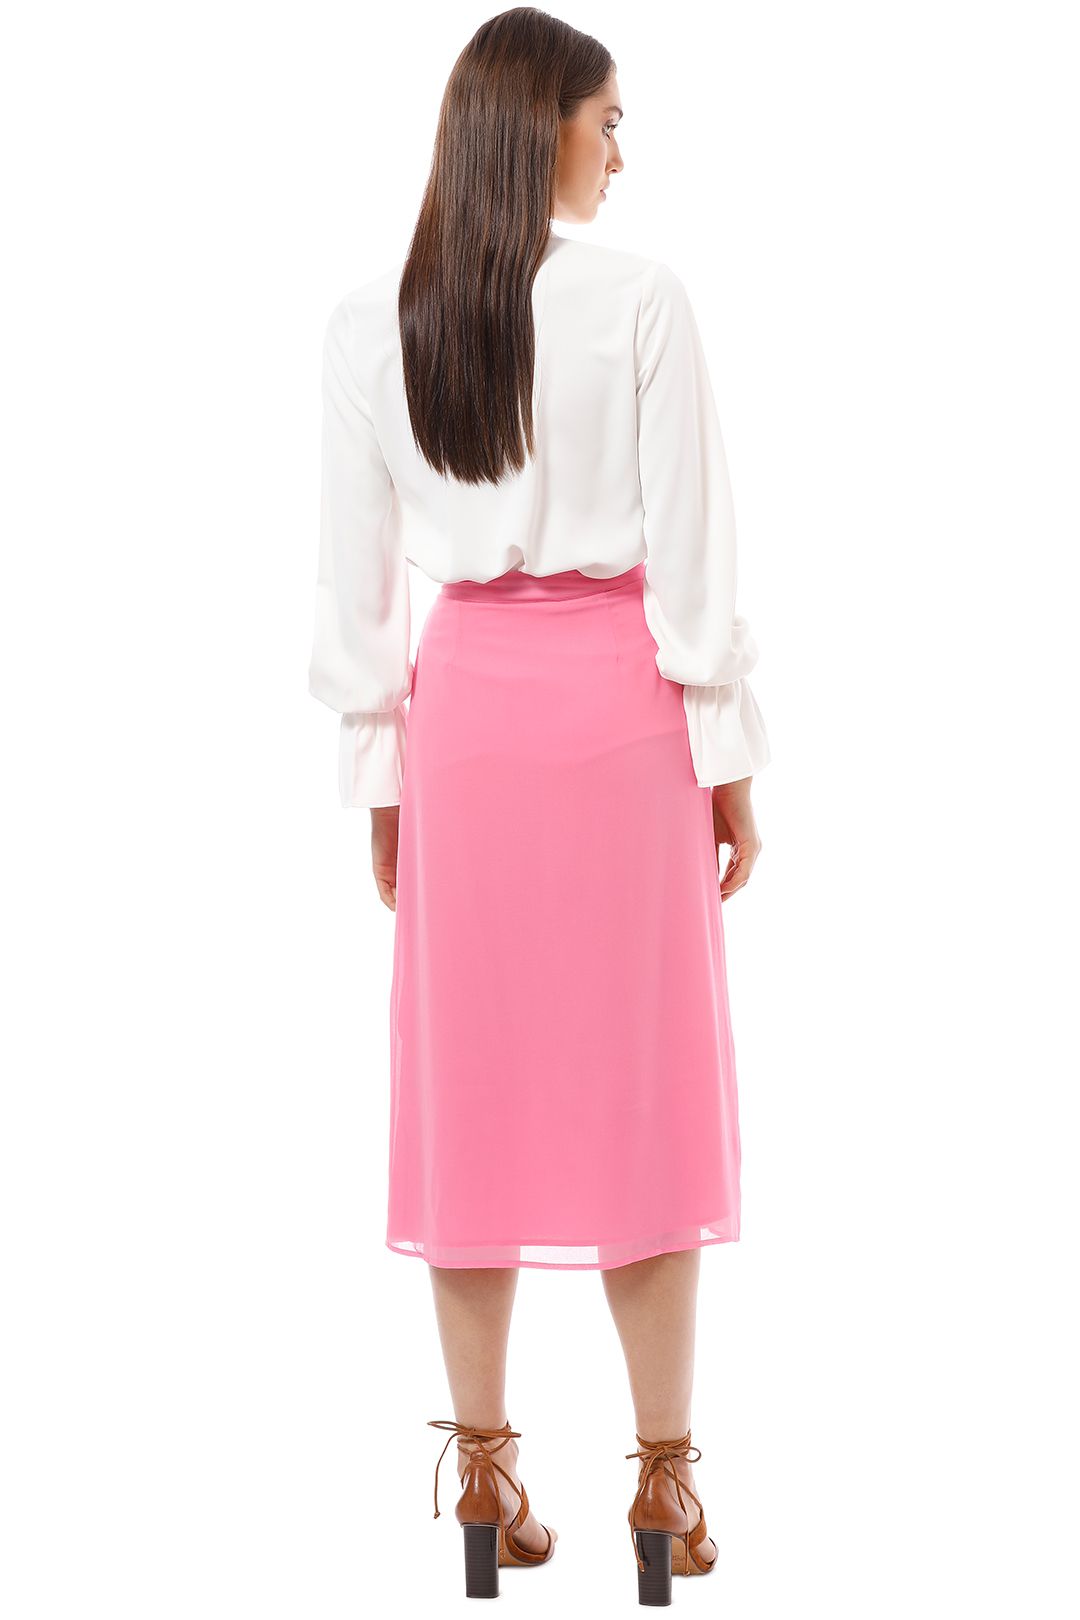 Closet London - Pleated Skirt - Pink - Back